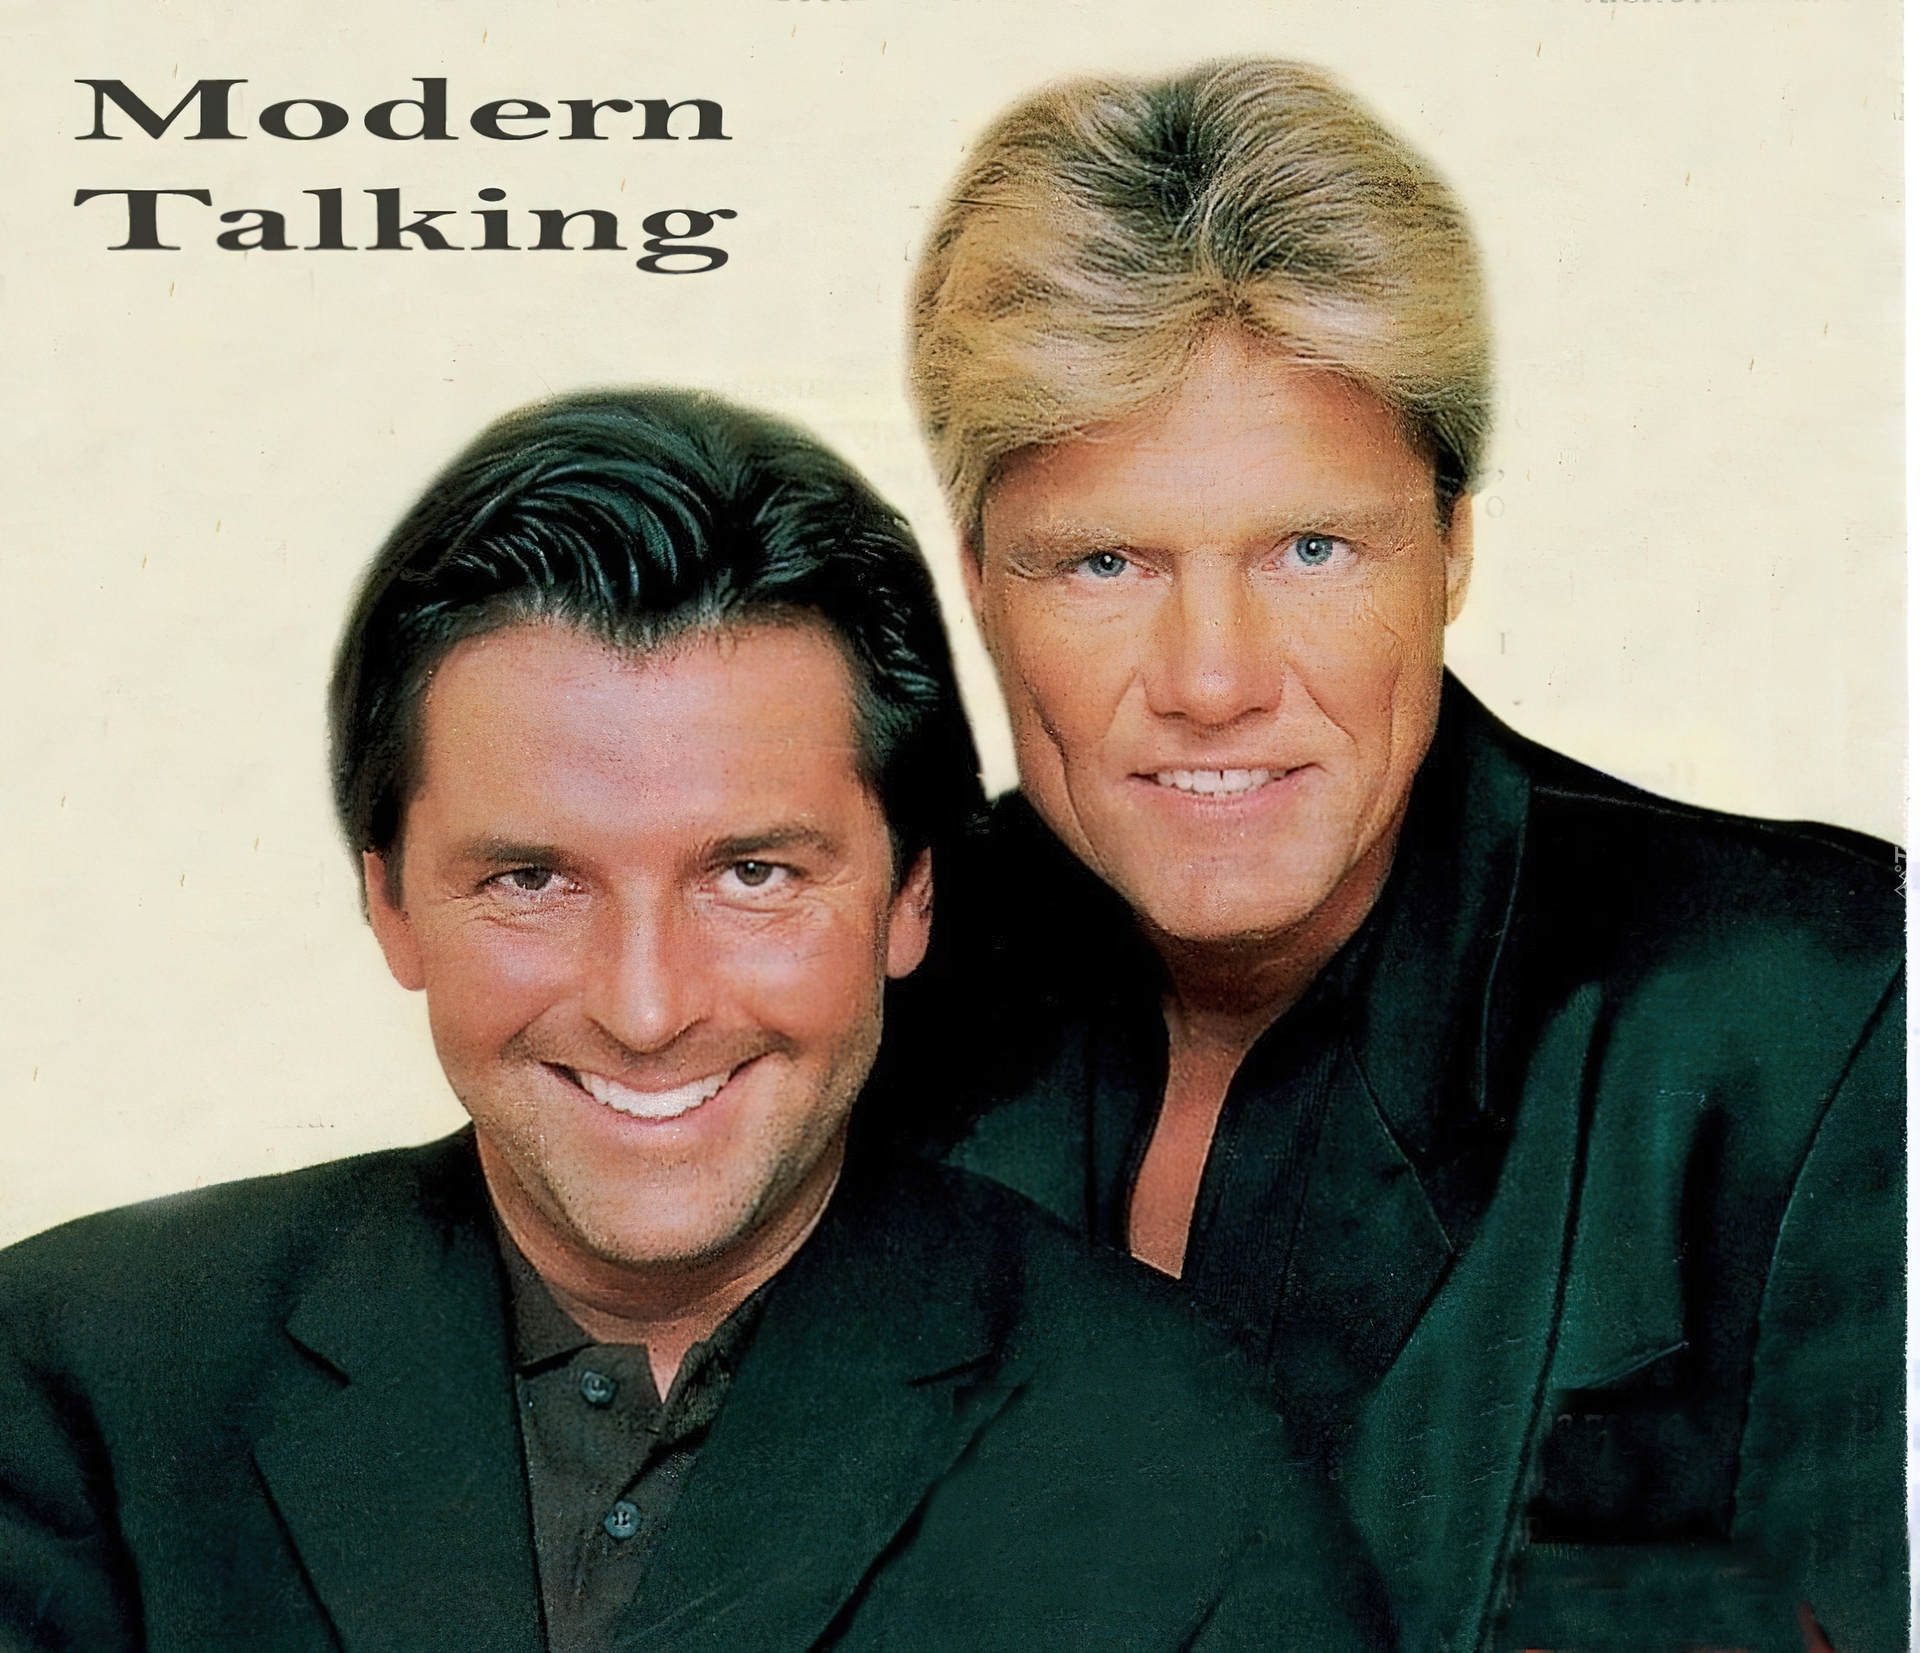 Modern talking мрз. Группа Modern talking. Группа Modern talking 2021. Modern talking 1996. Солист группы Modern talking.